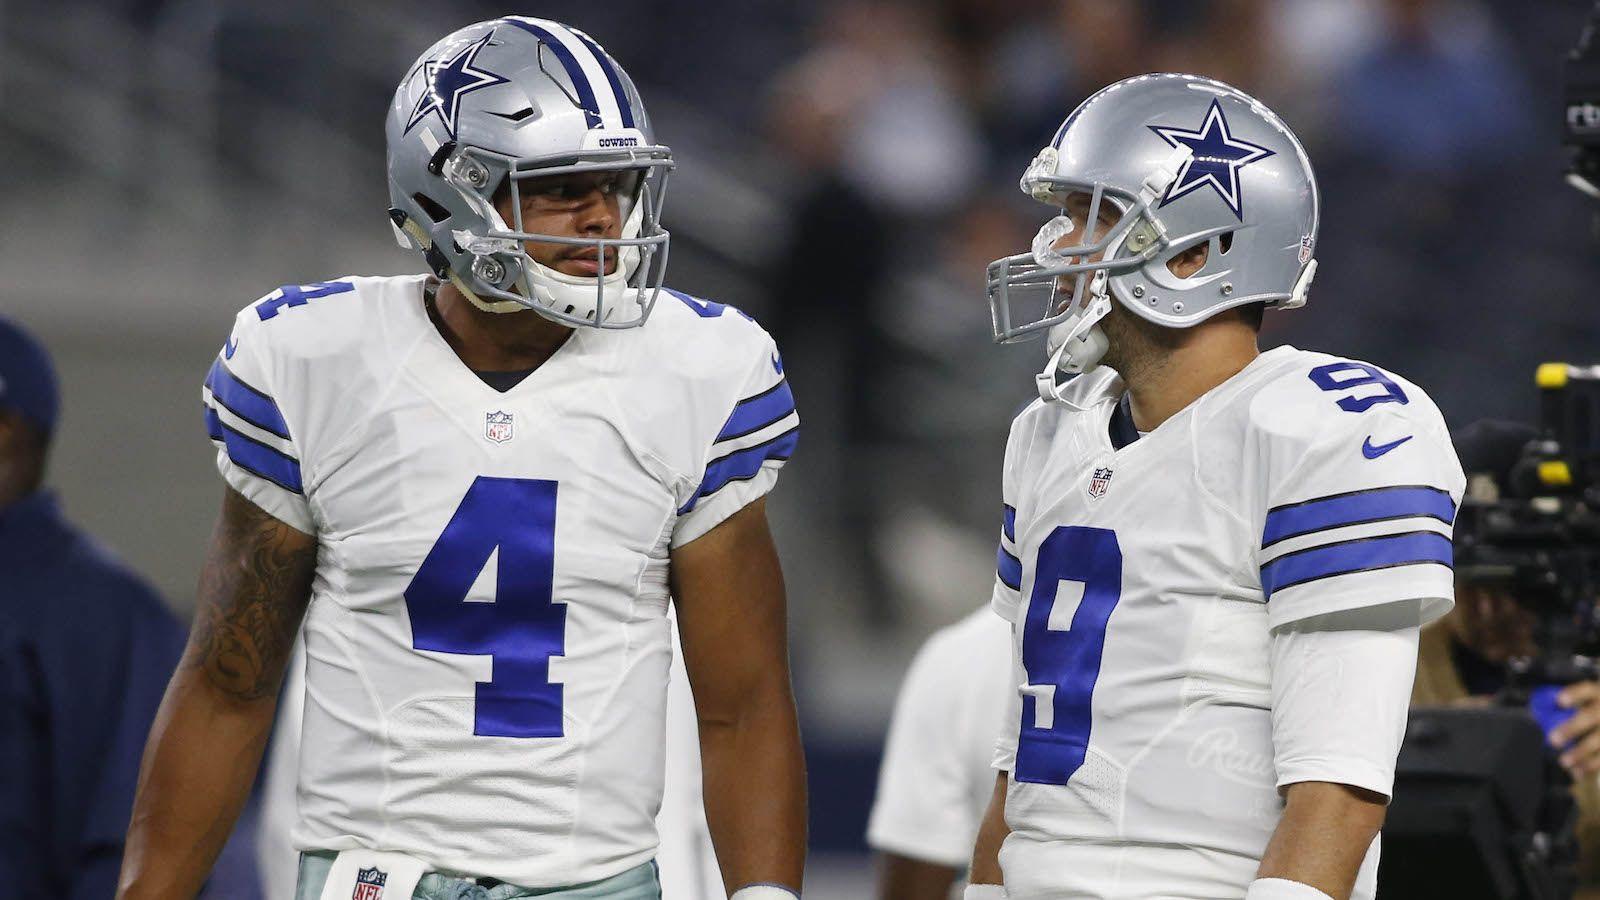 Romo's Hurt (Again), But The Dallas Cowboys Aren't As Screwed As